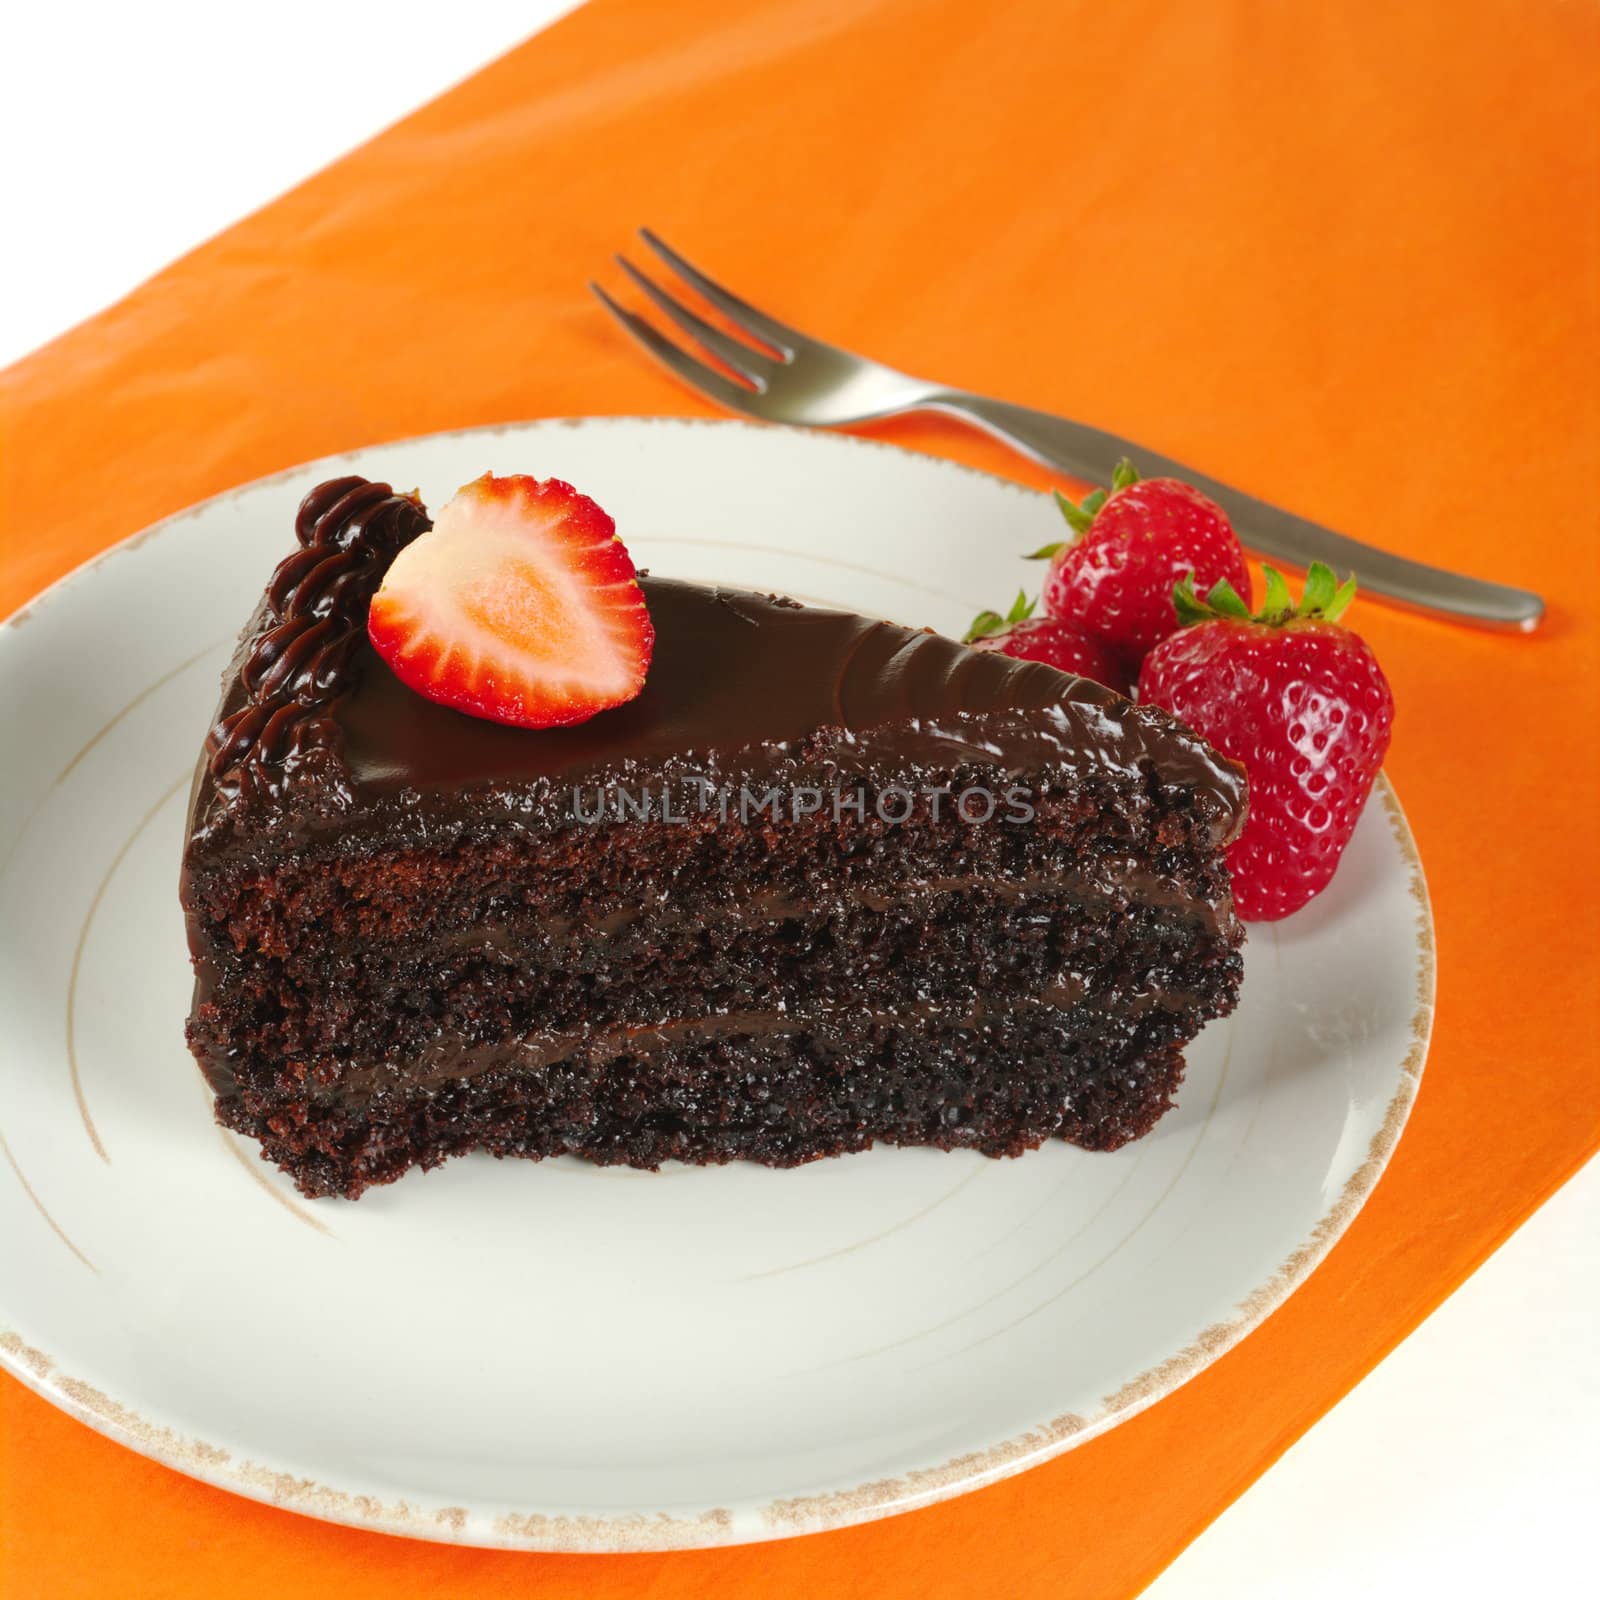 Chocolate Cake with Strawberries by ildi